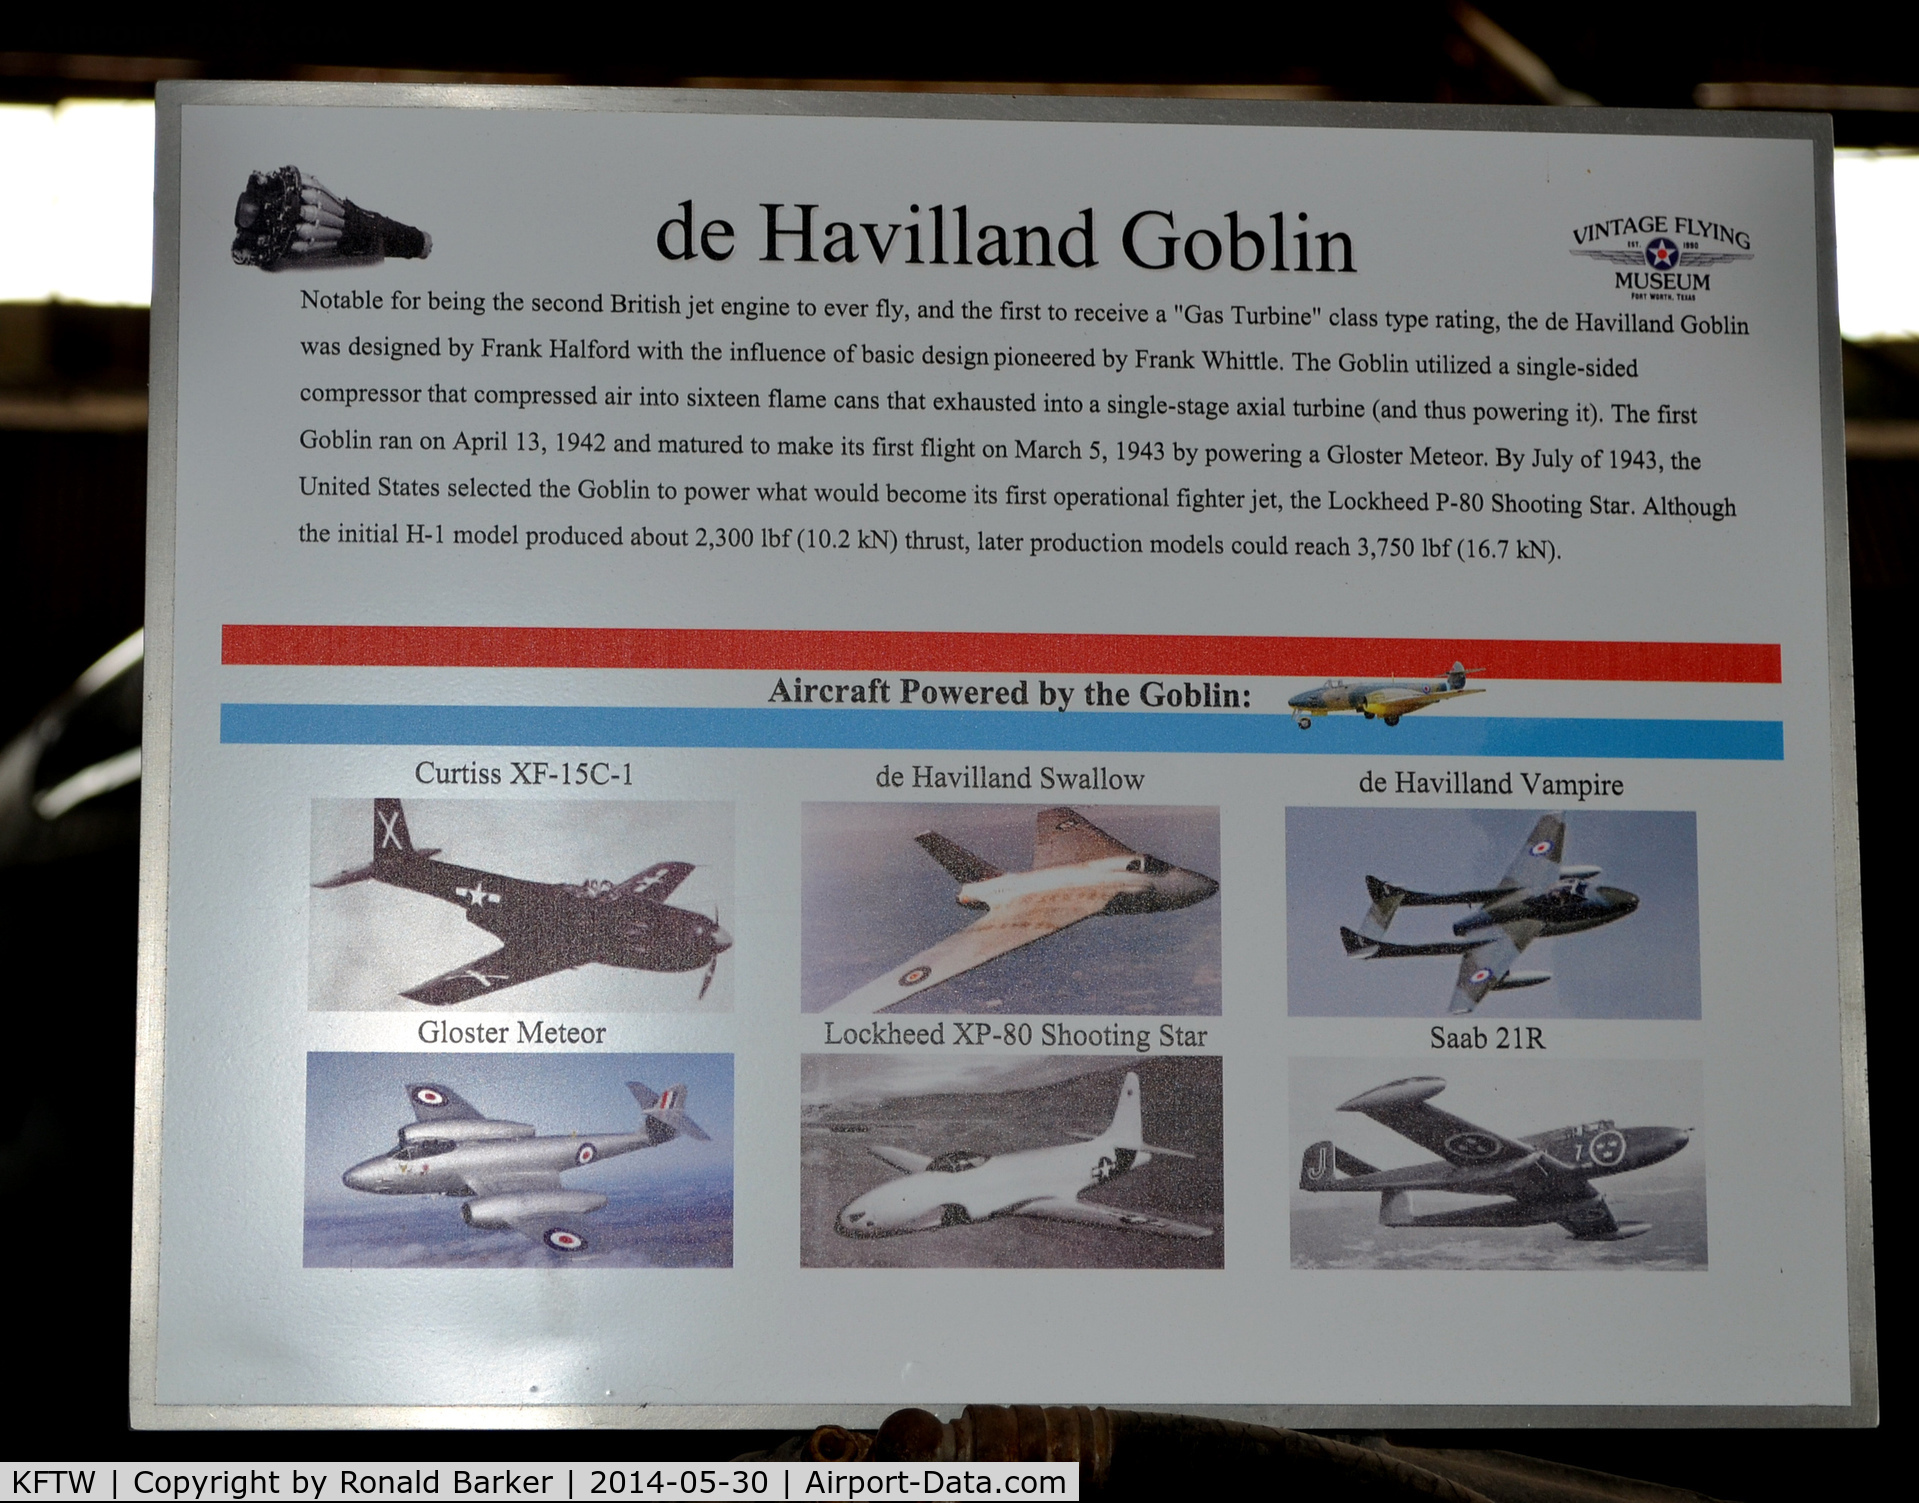 Fort Worth Meacham International Airport (FTW) - de Haviland Goblin engine, Vintage Flying Museum